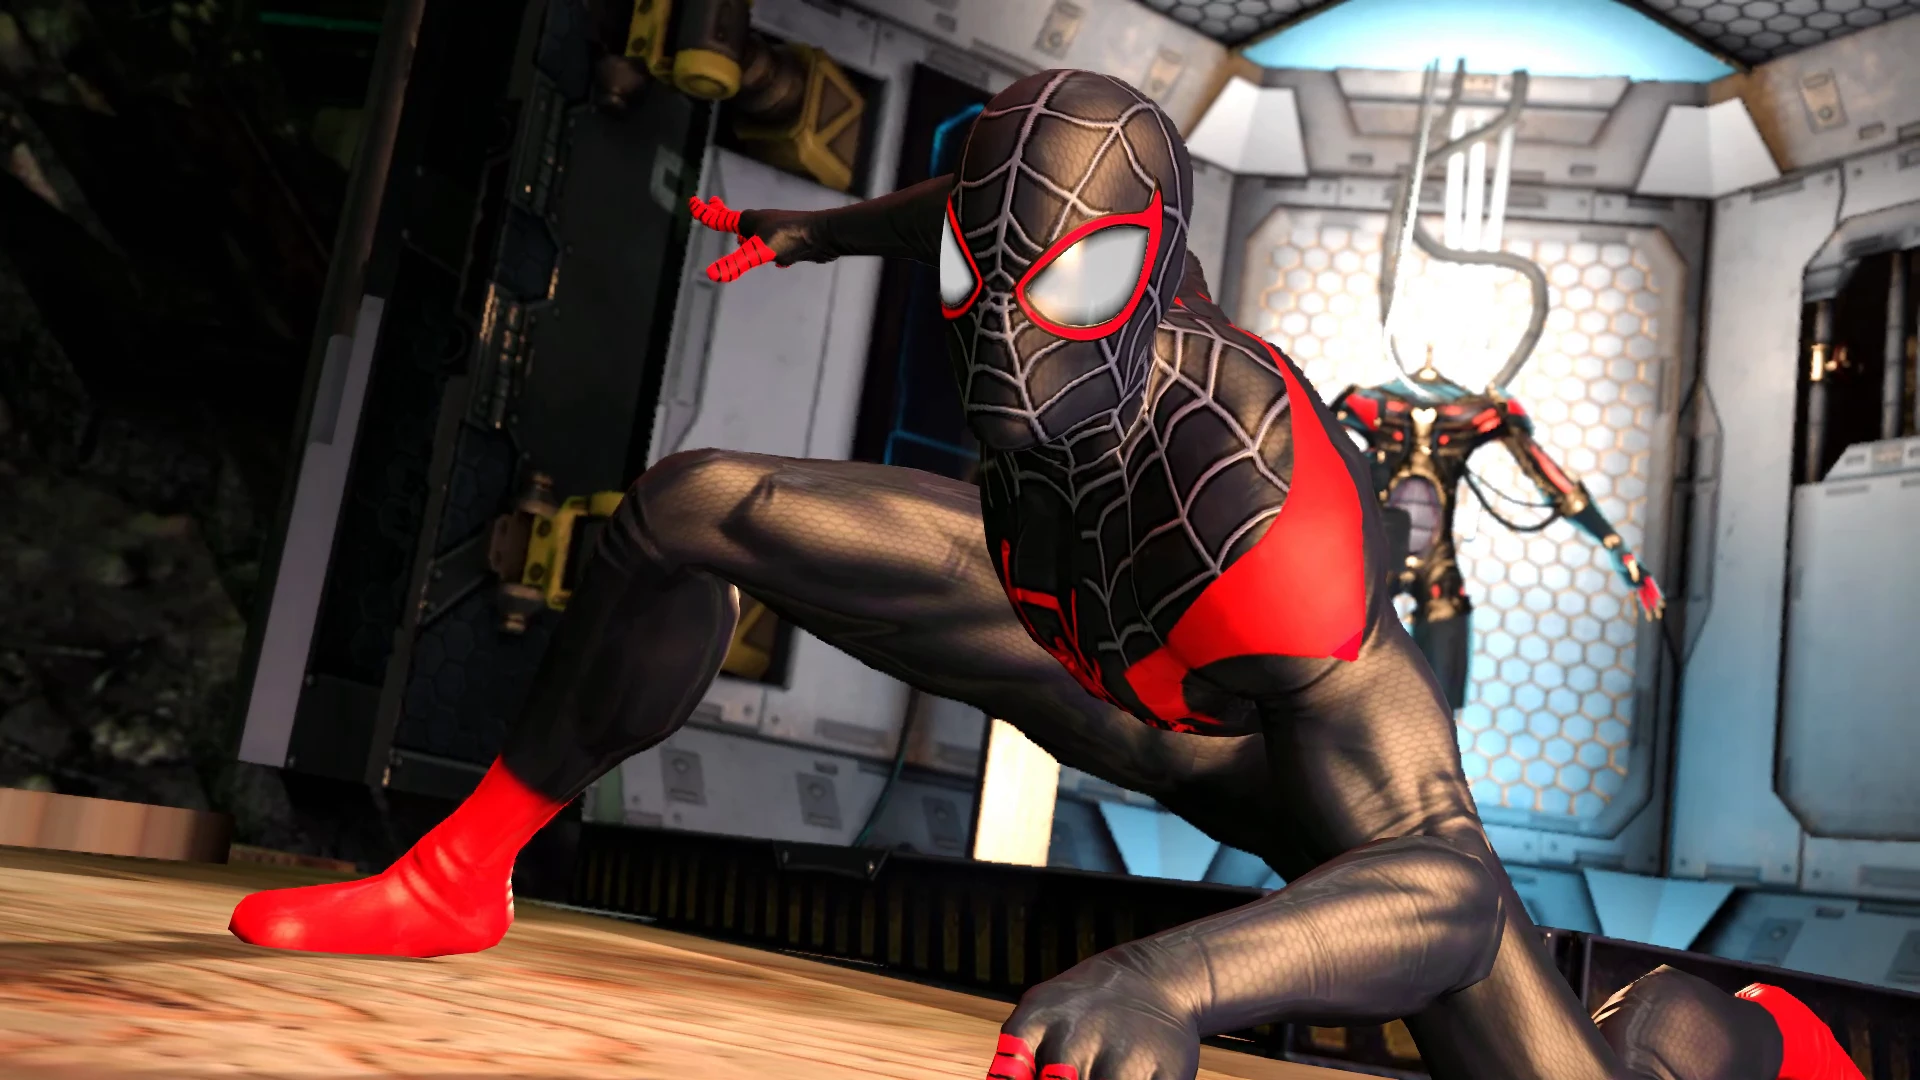 The amazing Spider-man (игра, 2012). Человек паук амазинг 2 игра. Spider-man 2 (игра, 2023). Человек паук 2 игра 2023.